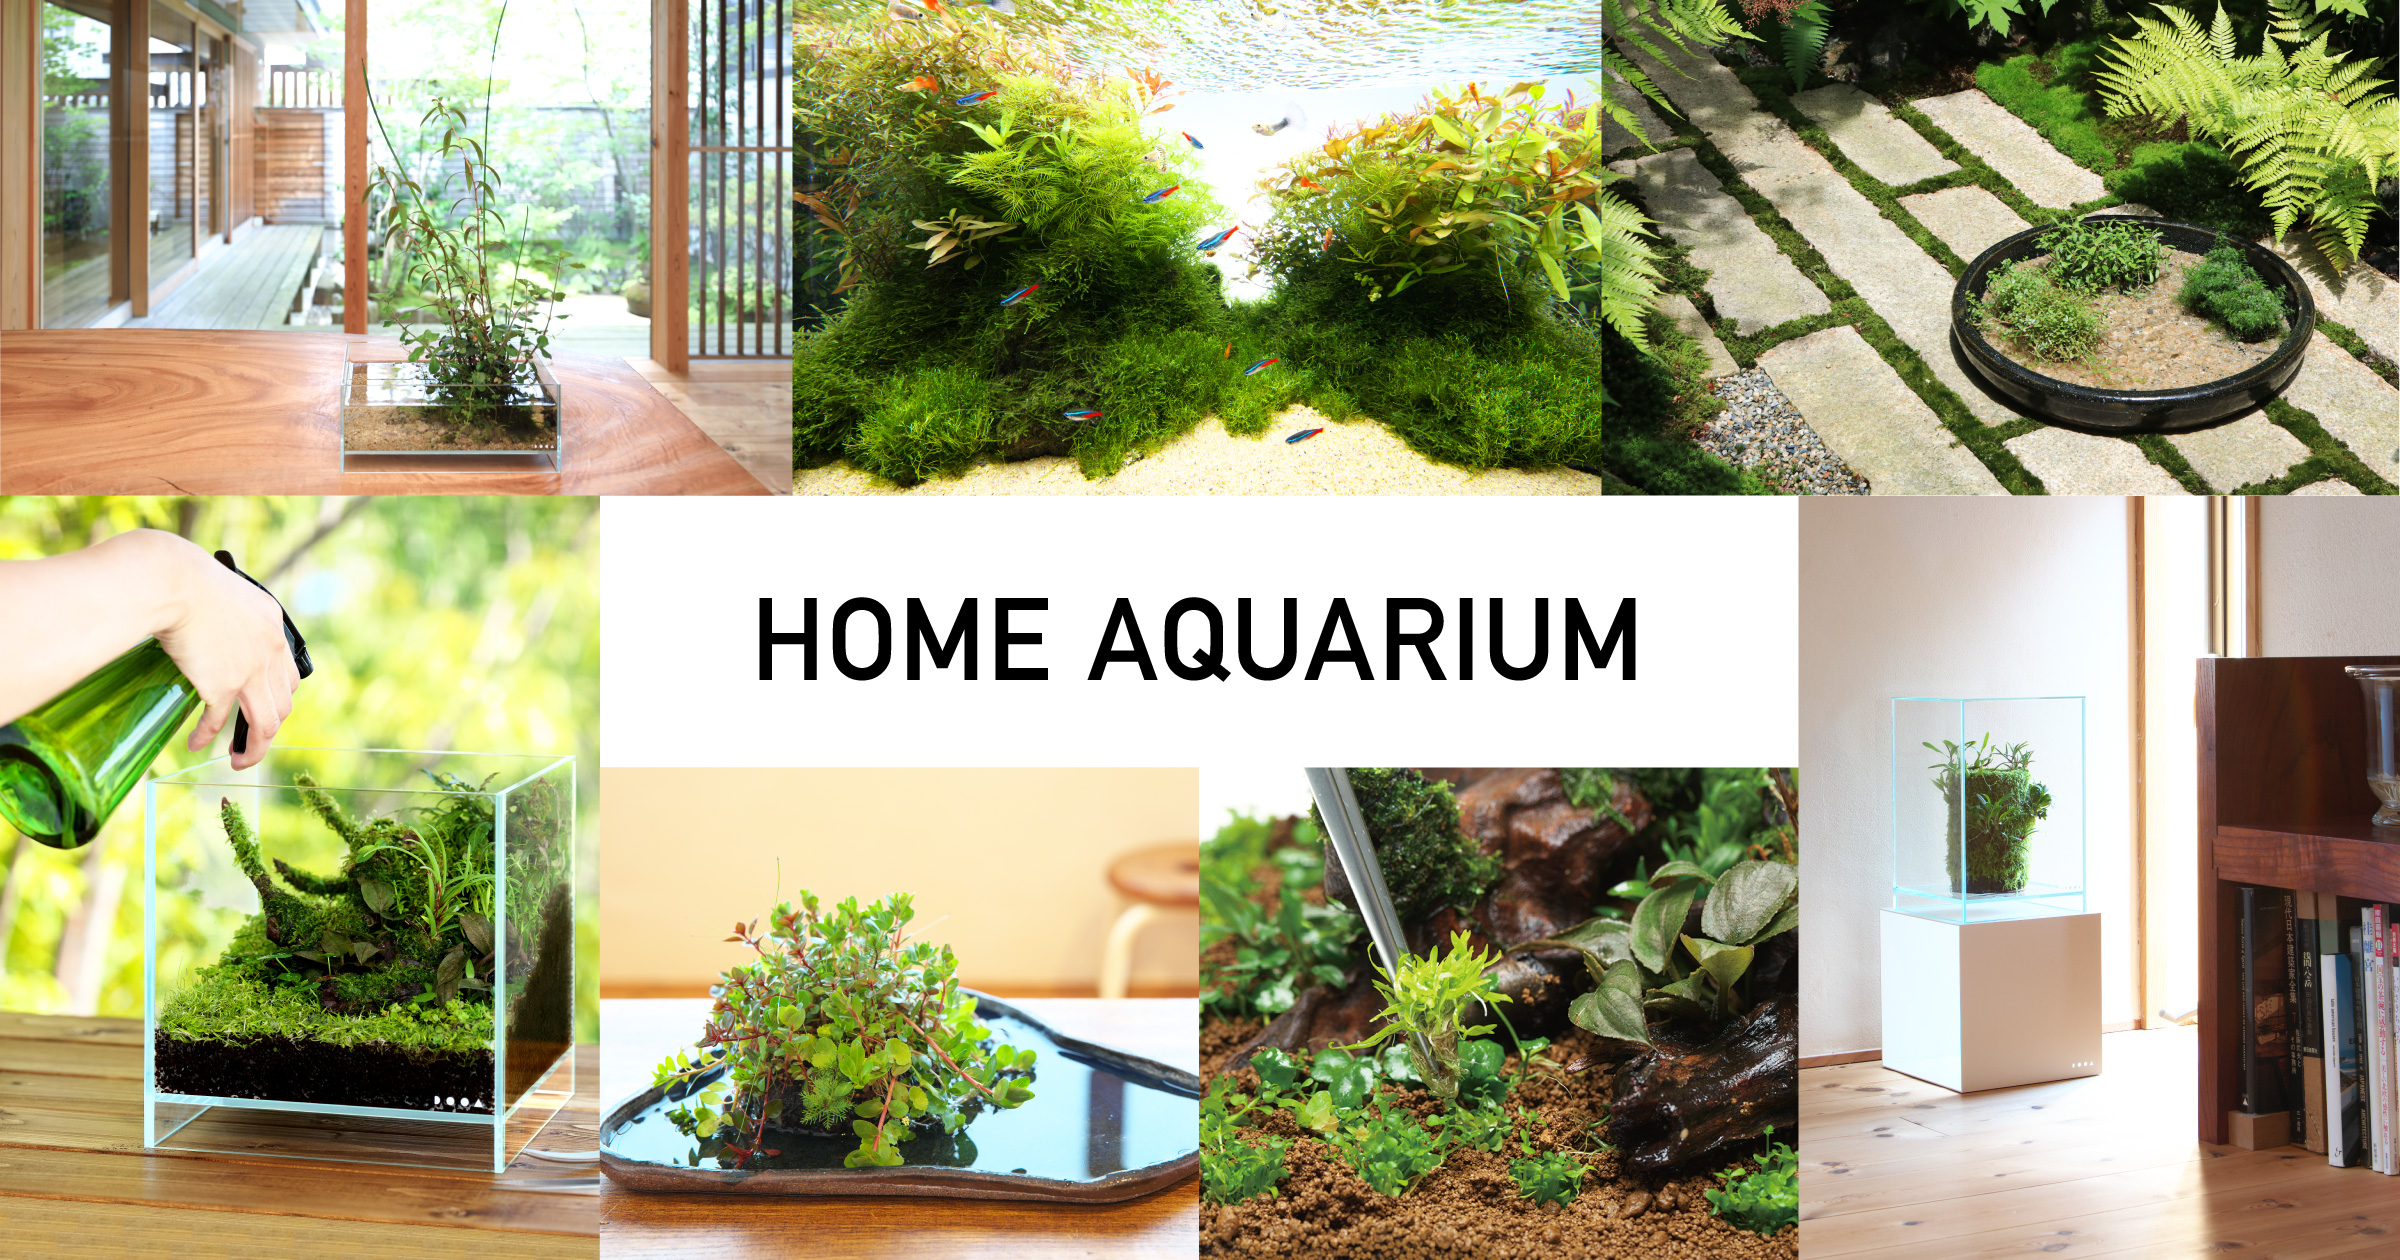 HOME AQUARIUM ‘Enjoy plants with Neo Glass Air’